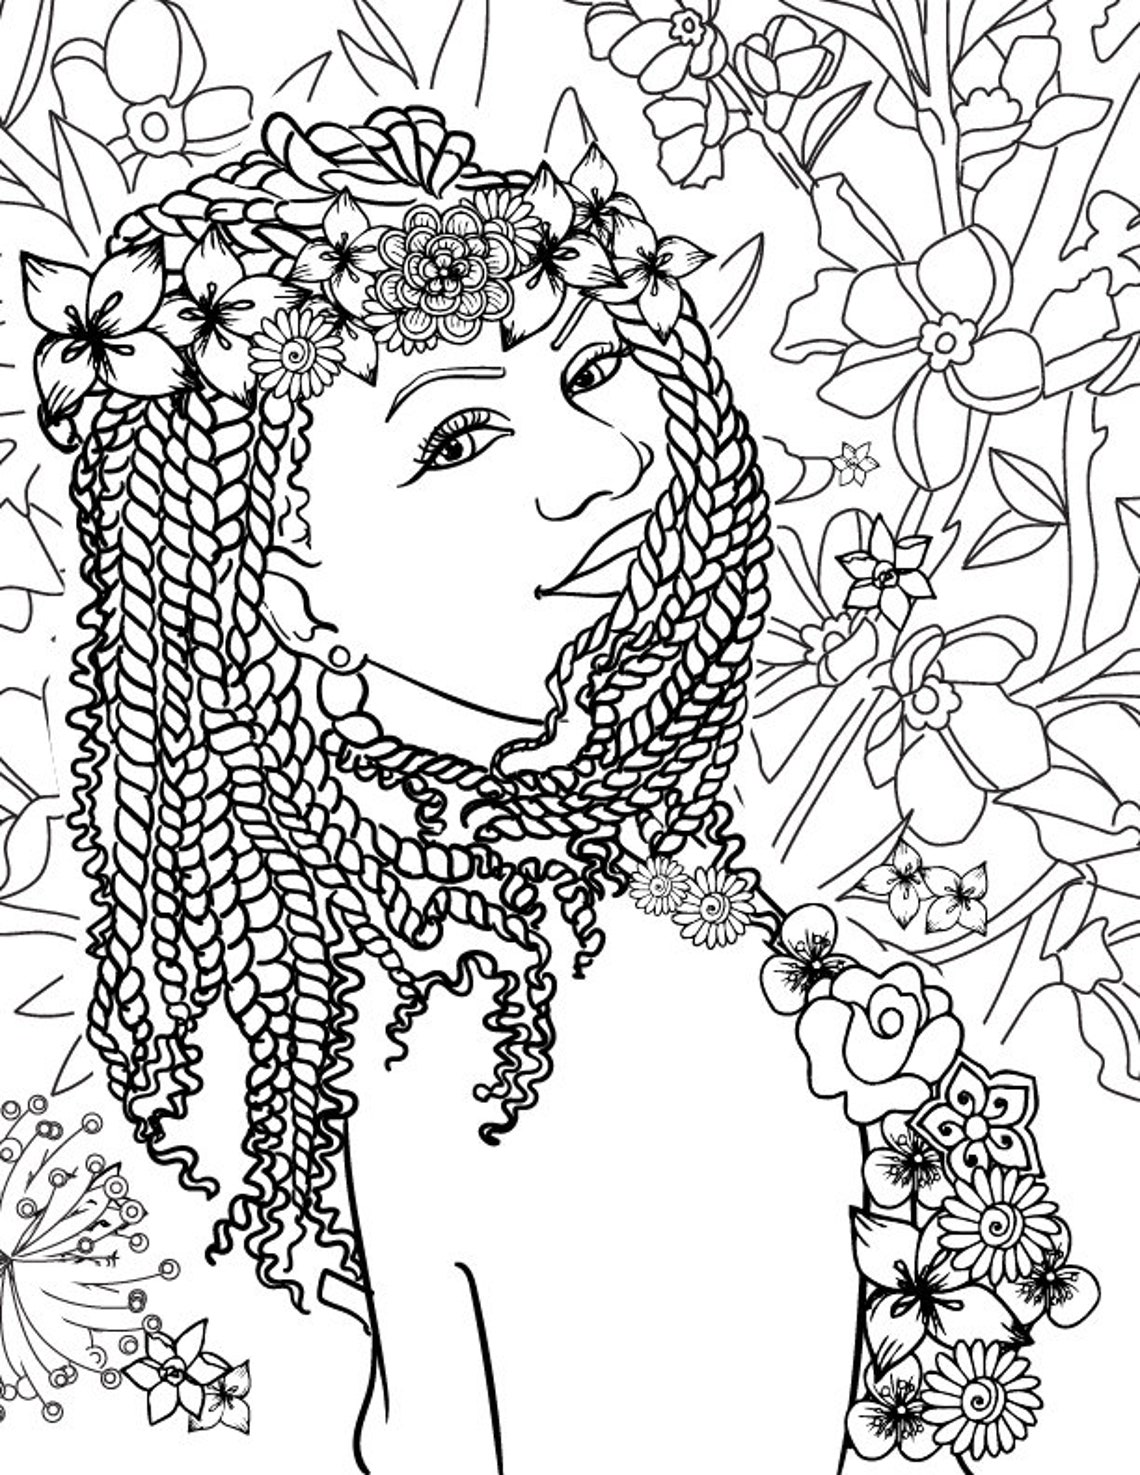 Printable Coloring Page Melanin Coloring Page Black Woman Coloring Page ...